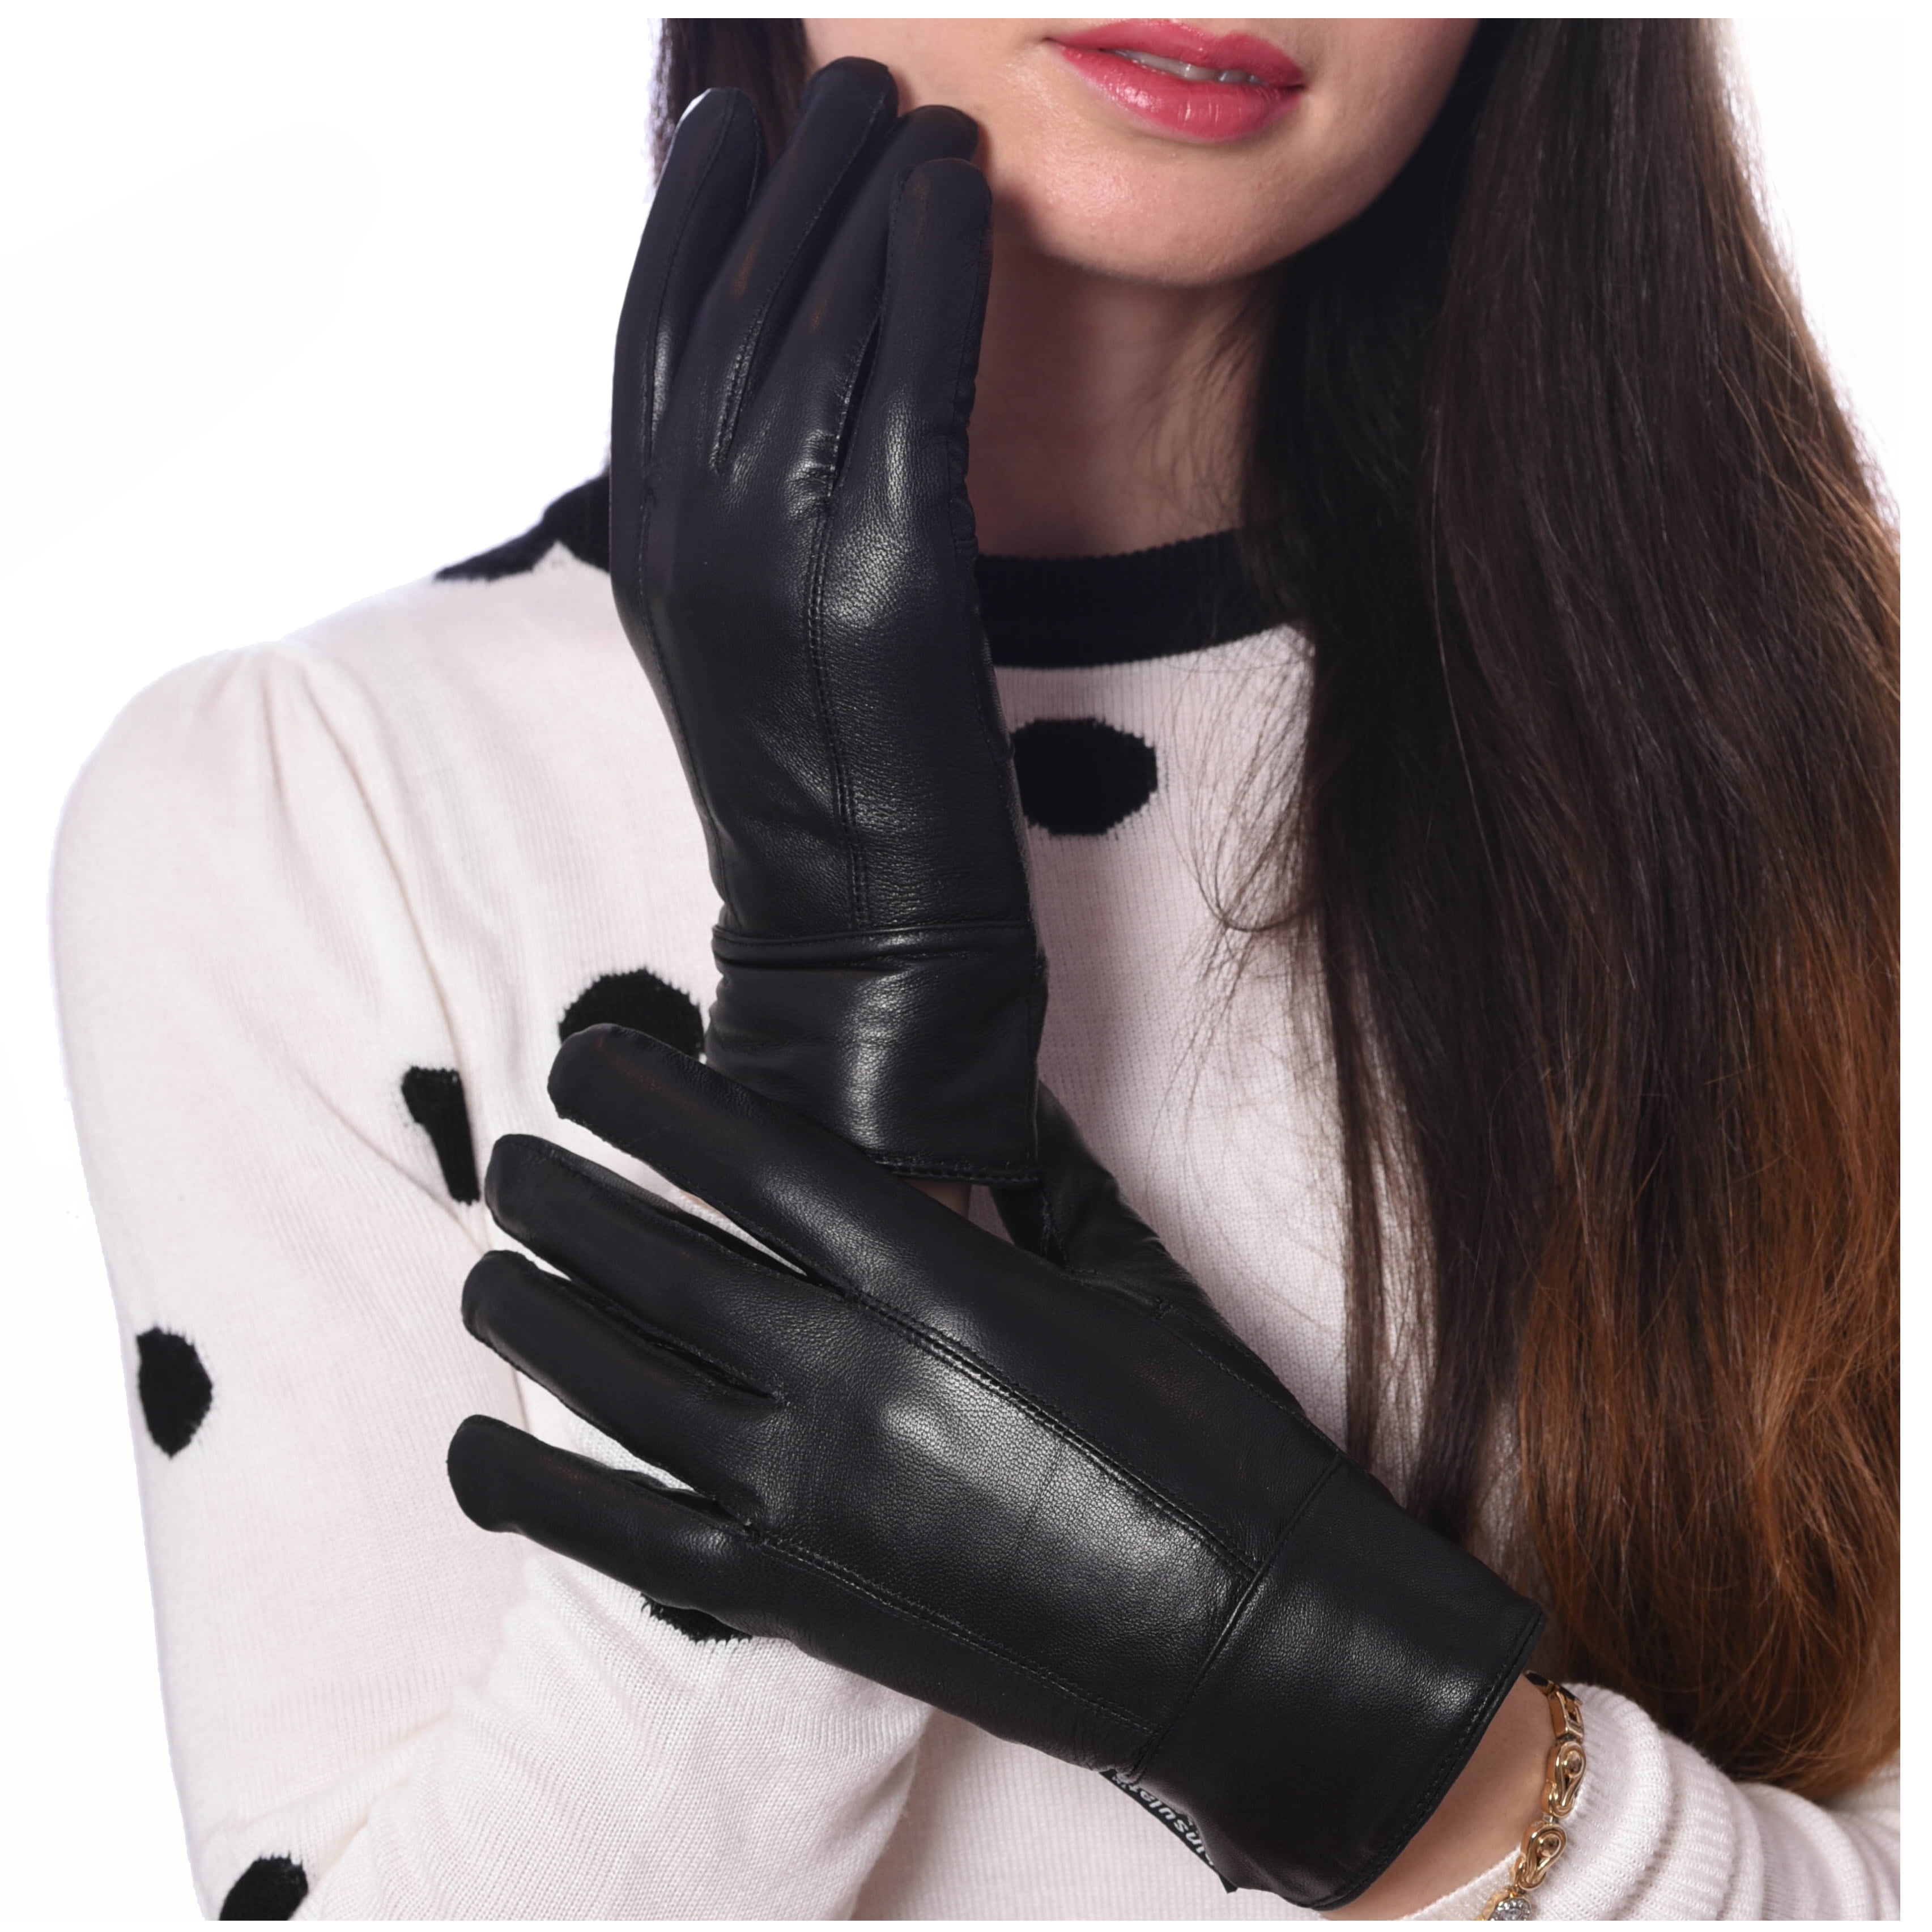 Women Unlined Genuine Leather Driving Fashion Gloves MEDIUM, BLACK